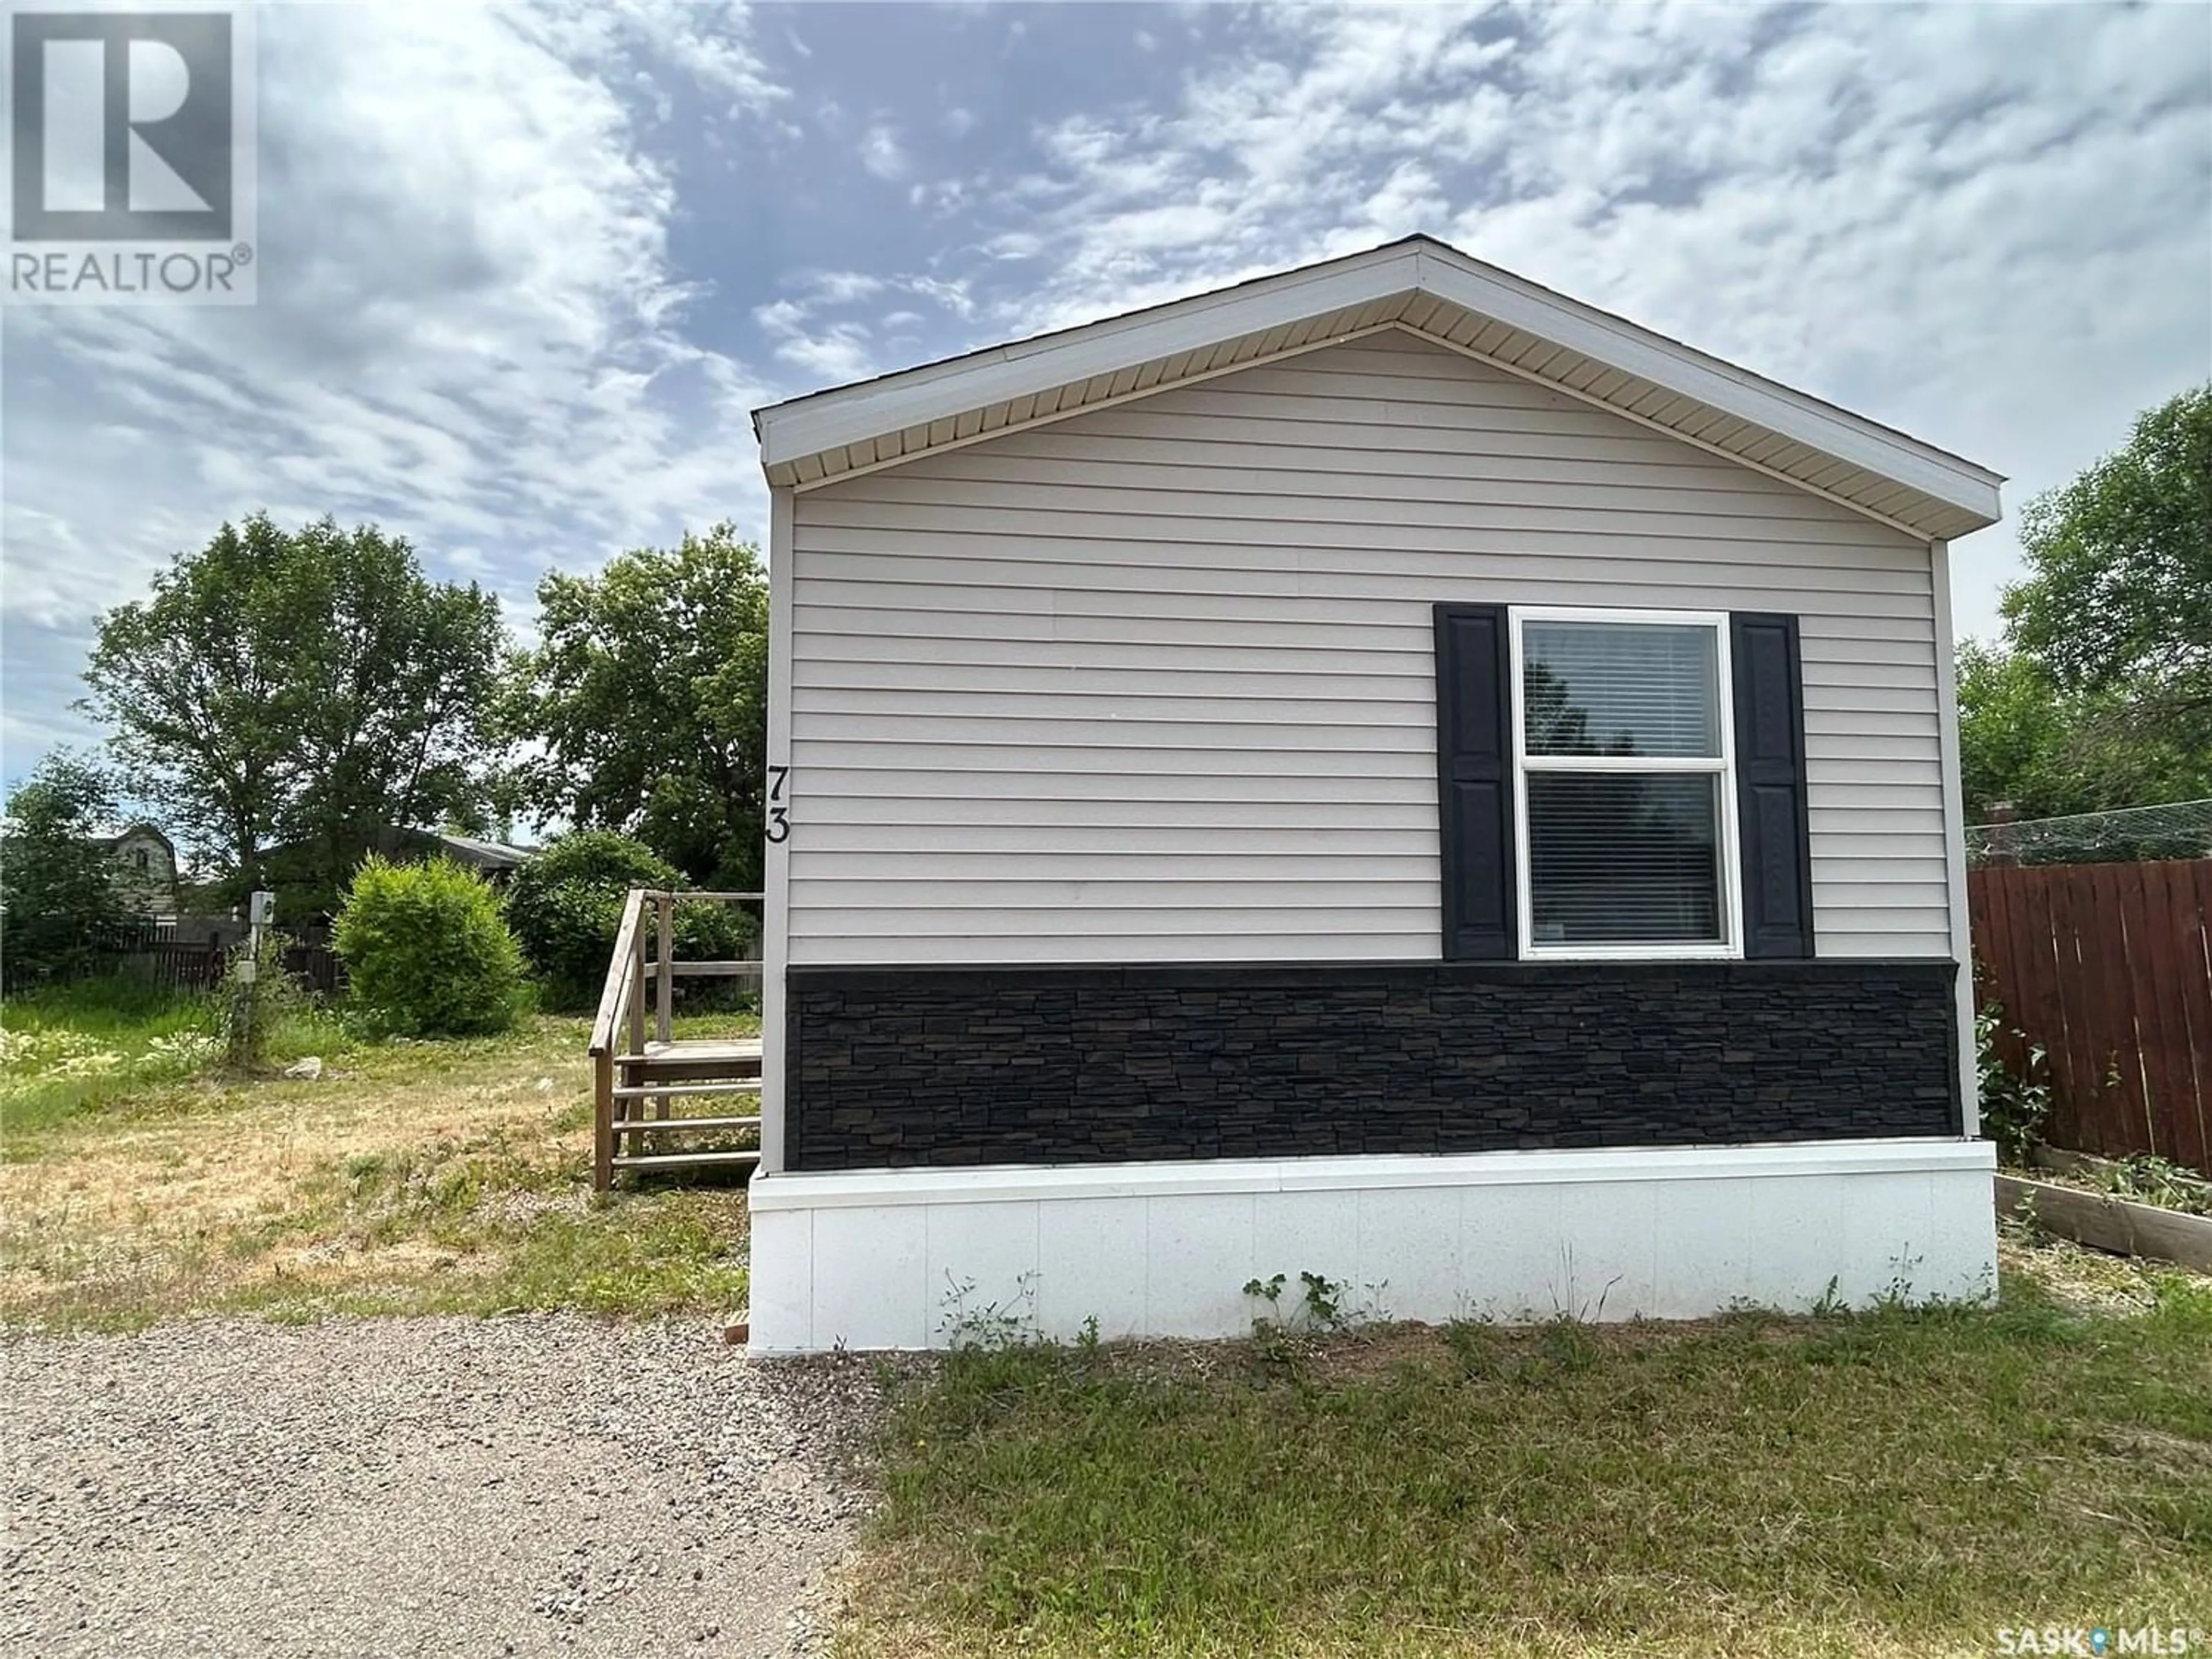 Home with vinyl exterior material for 73 Willow Park GREENS, Estevan Saskatchewan S4A2R5